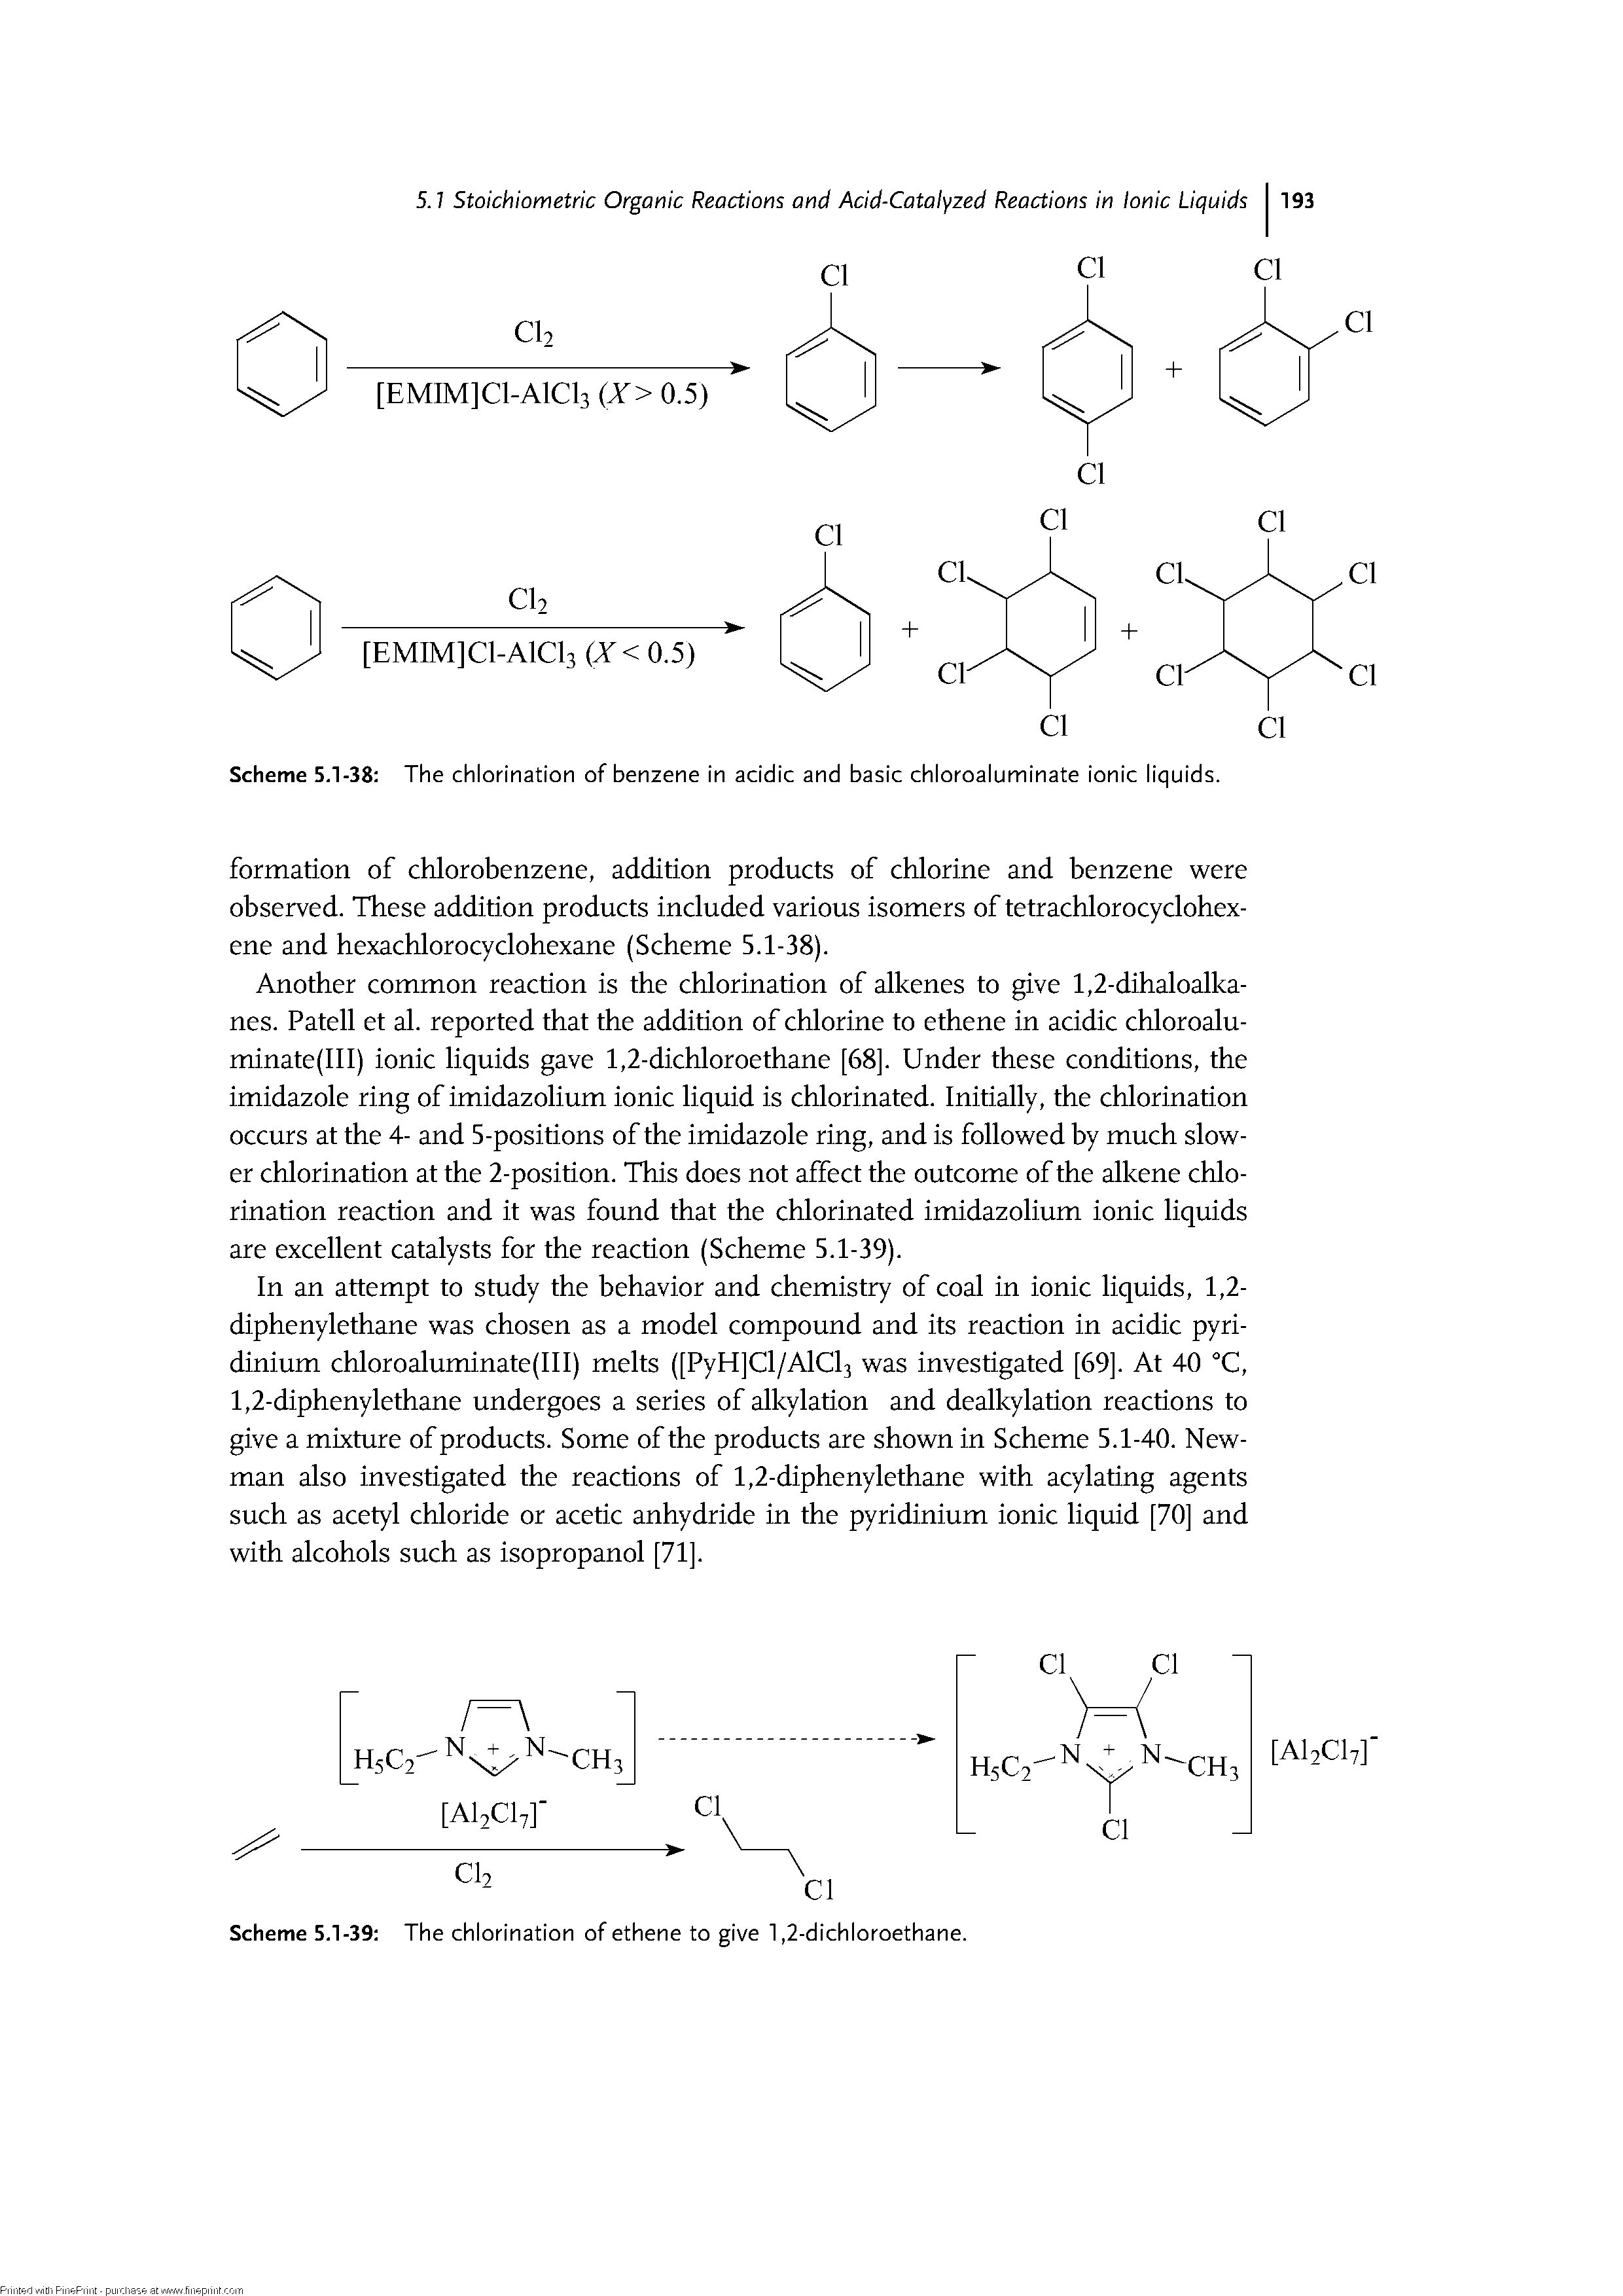 Scheme 5.1-38 The chlorination of benzene in acidic and basic chloroaluminate ionic liquids.